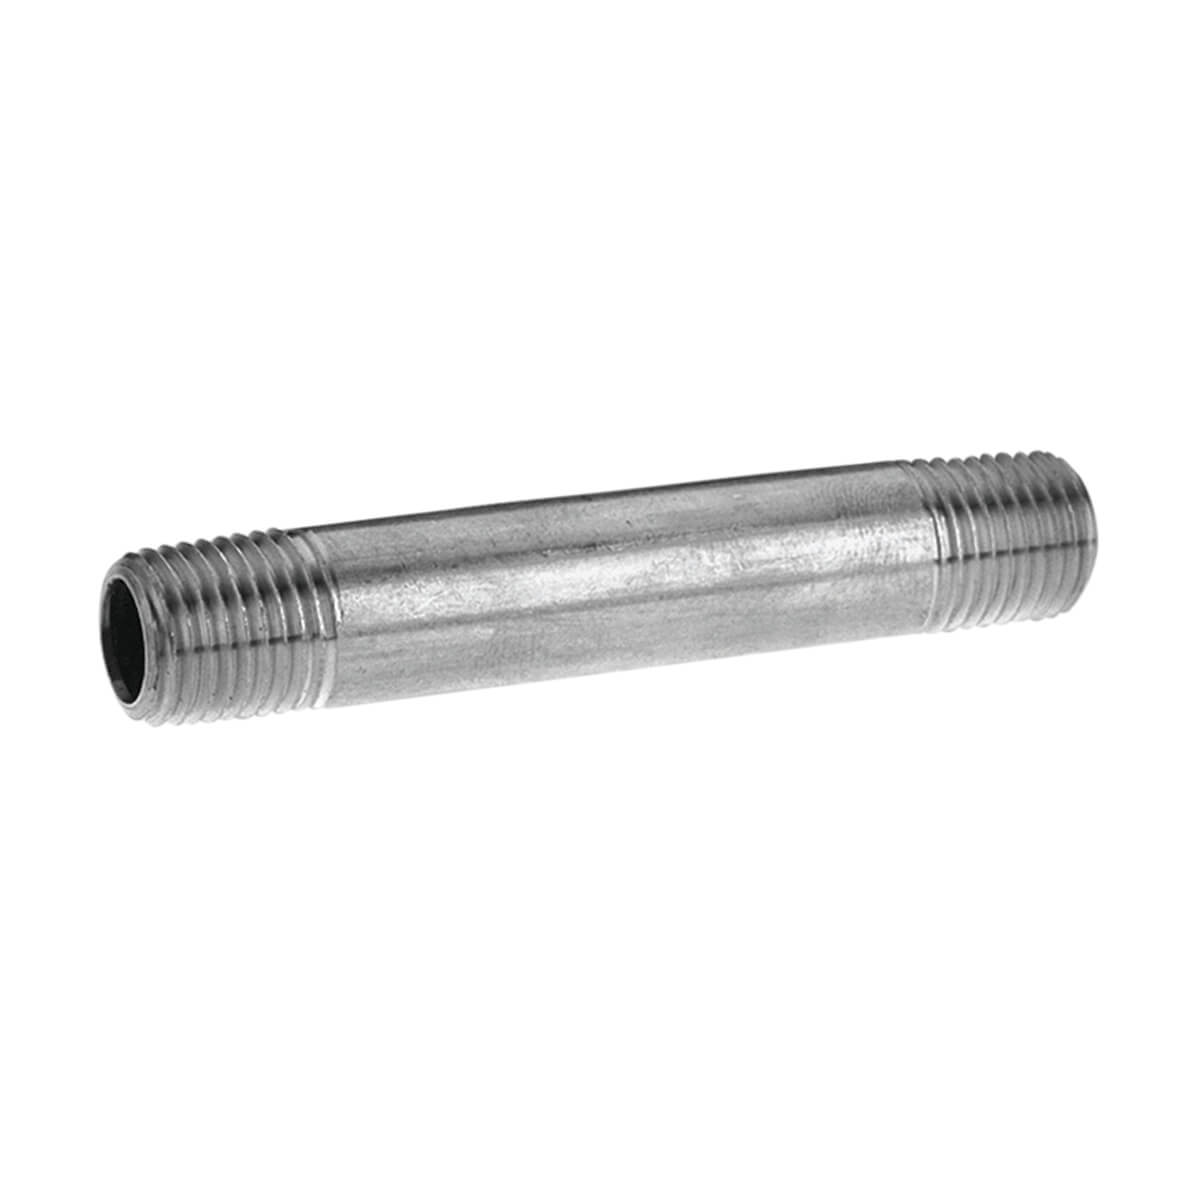 Pipe Nipple Galvanized Steel - 1-1/4-in x 2-1/2-in